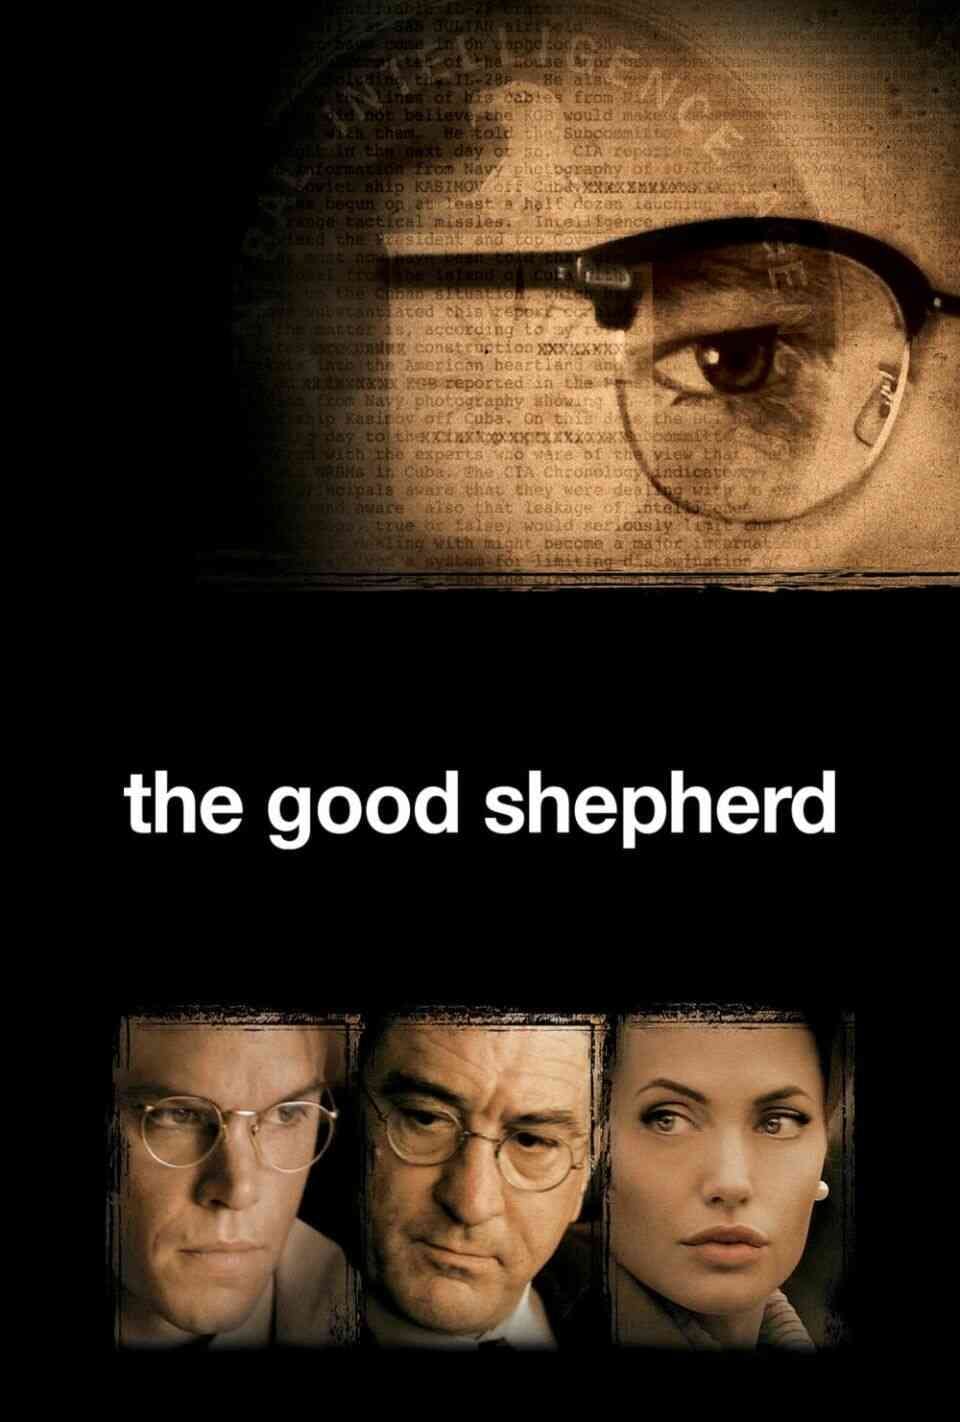 Read The Good Shepherd screenplay (poster)